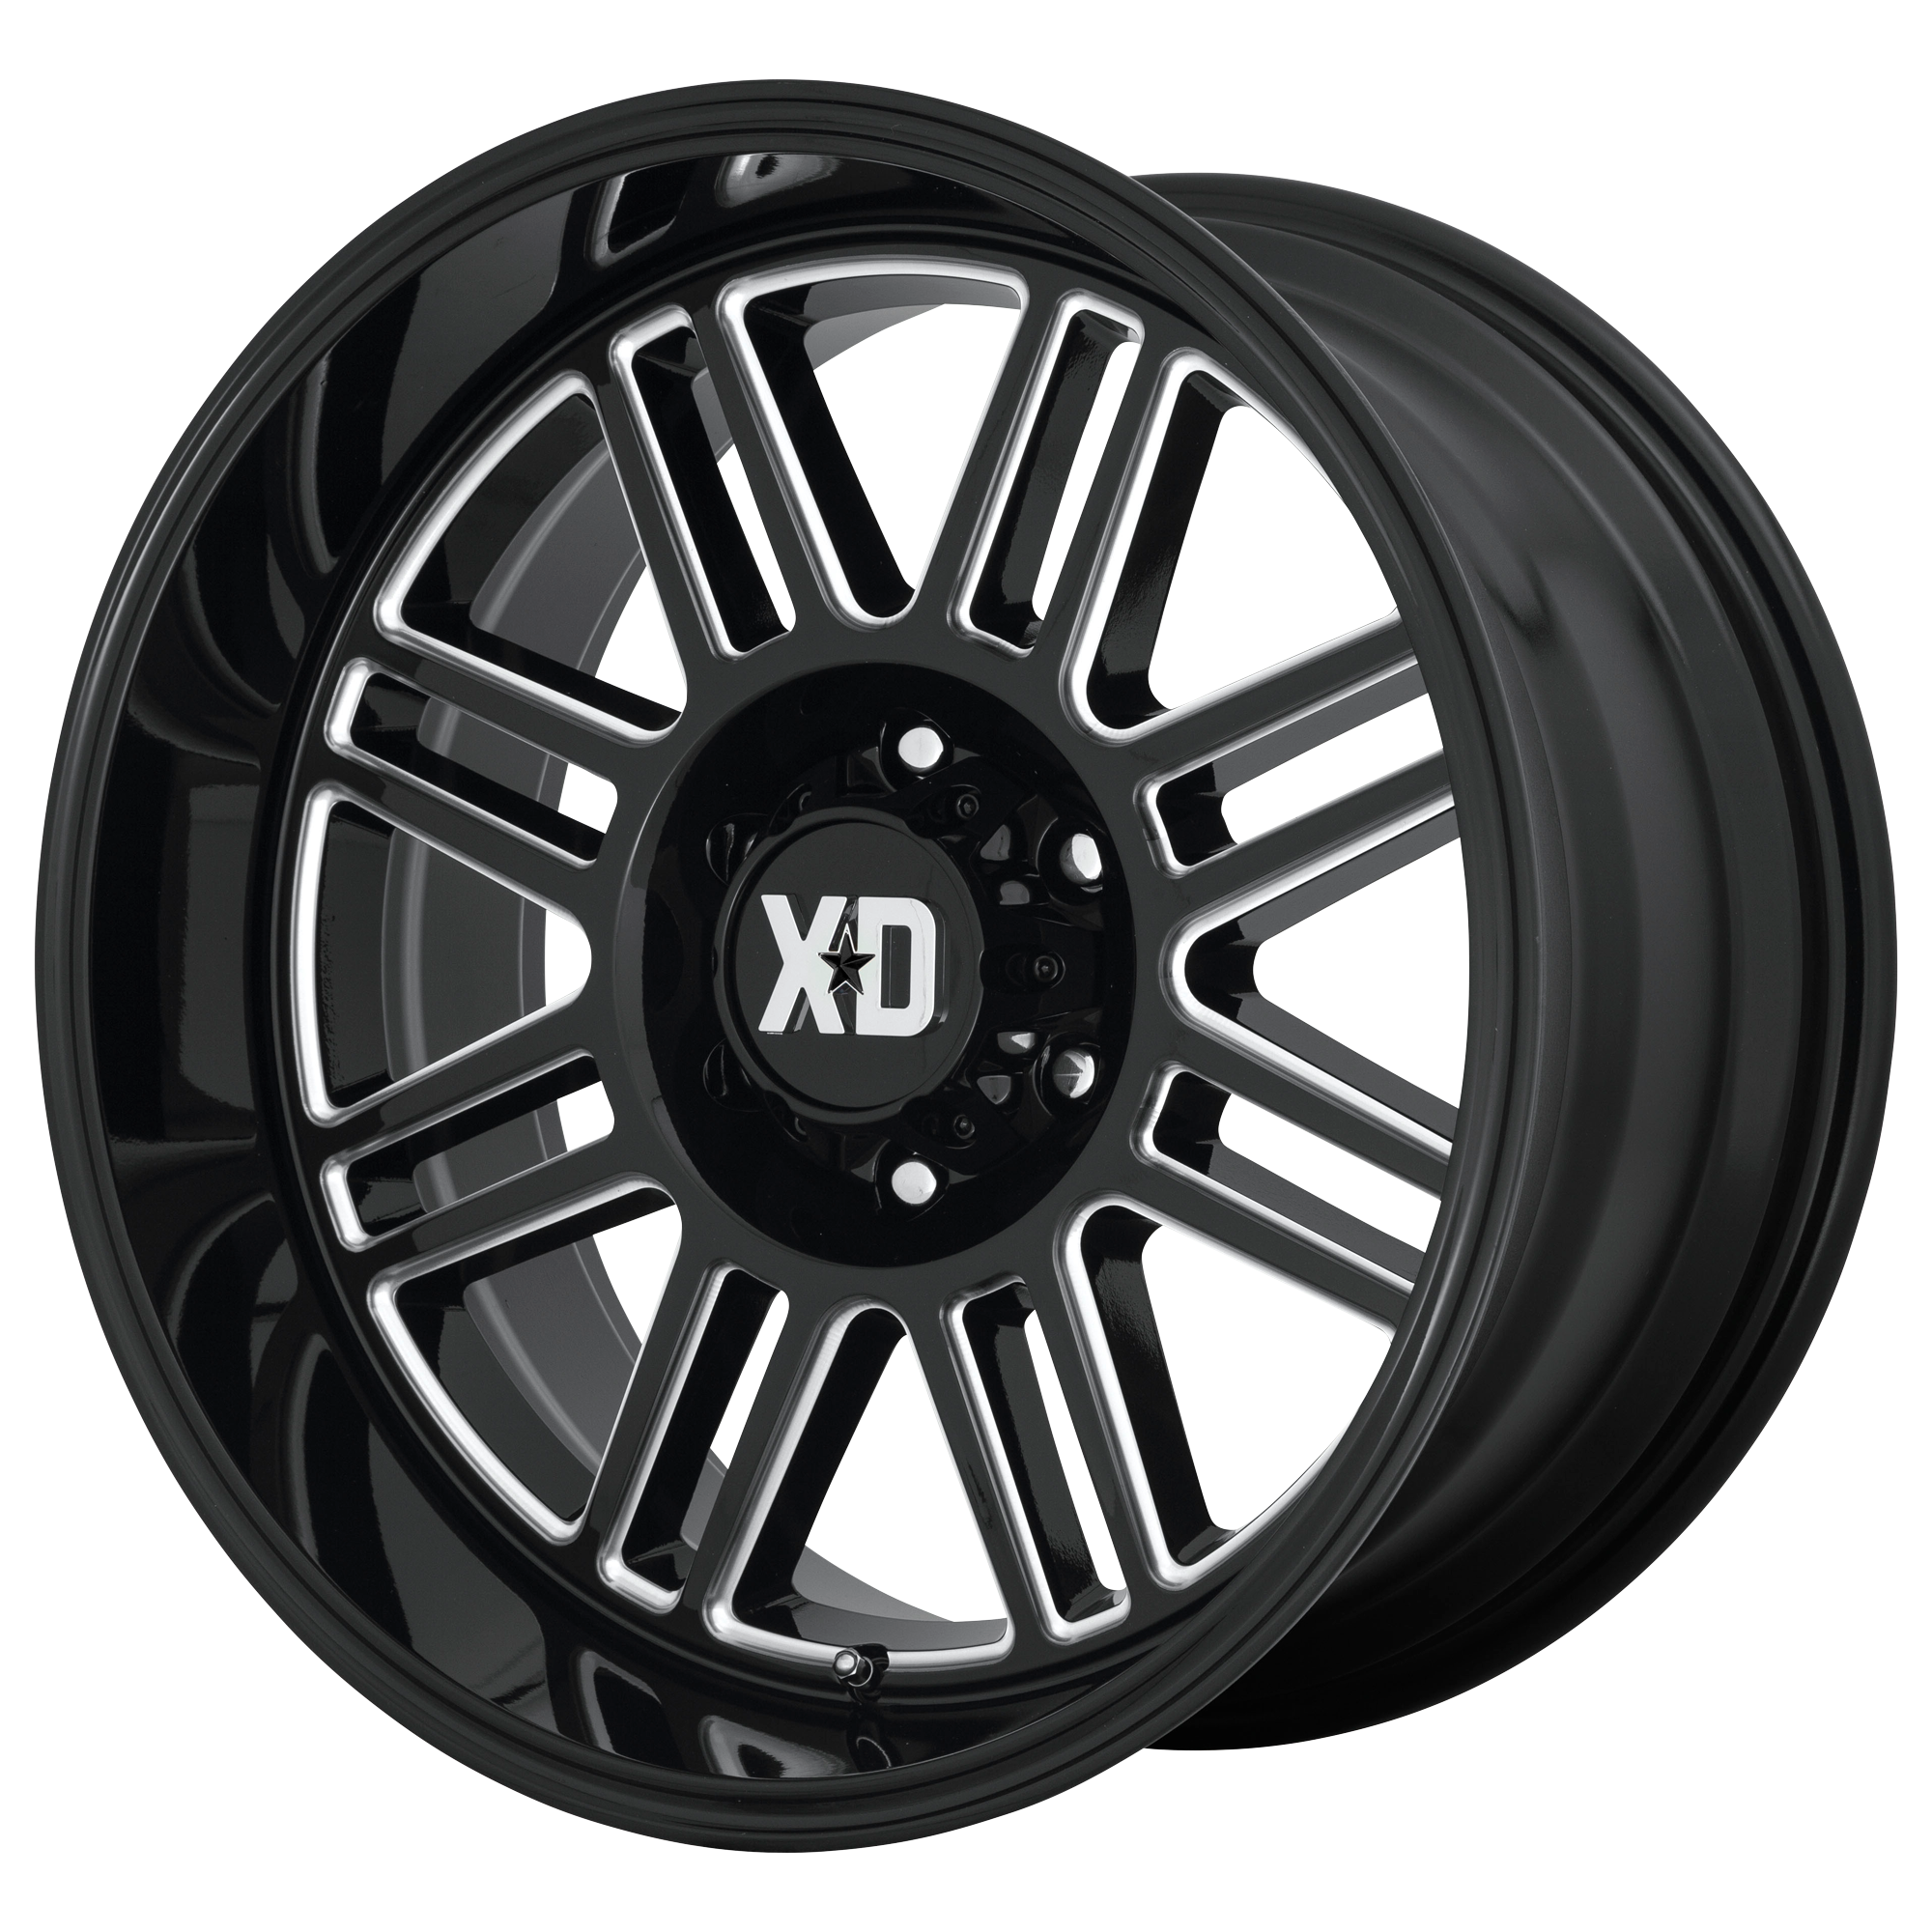 XD 20"x9" Non-Chrome Gloss Black Milled Custom Wheel ARSWCWXD85029050300